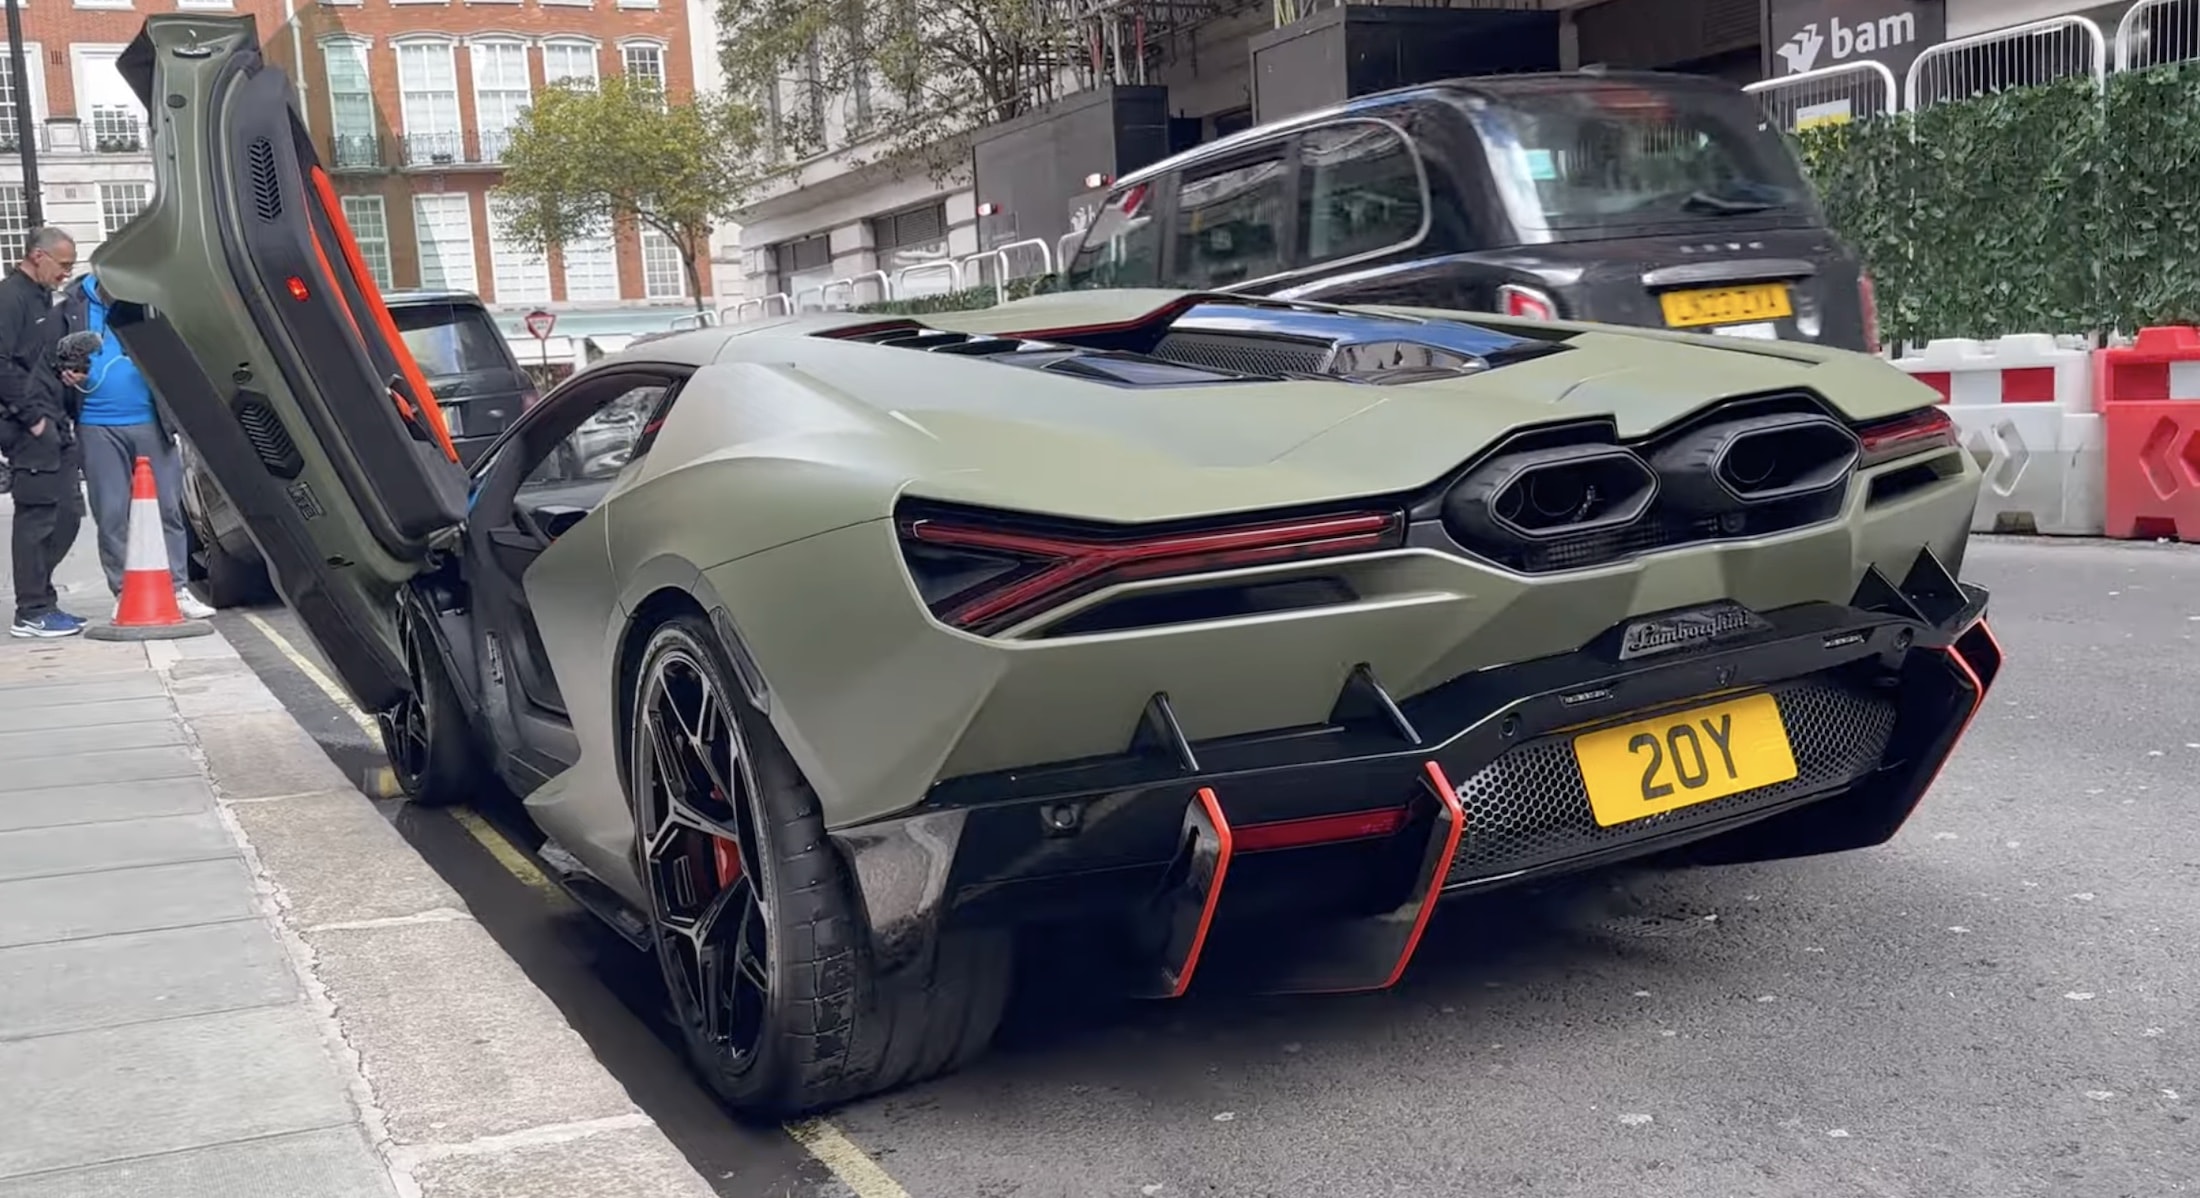 Lamborghini Revuelto Verde Turbine Supercar Takes London by Storm